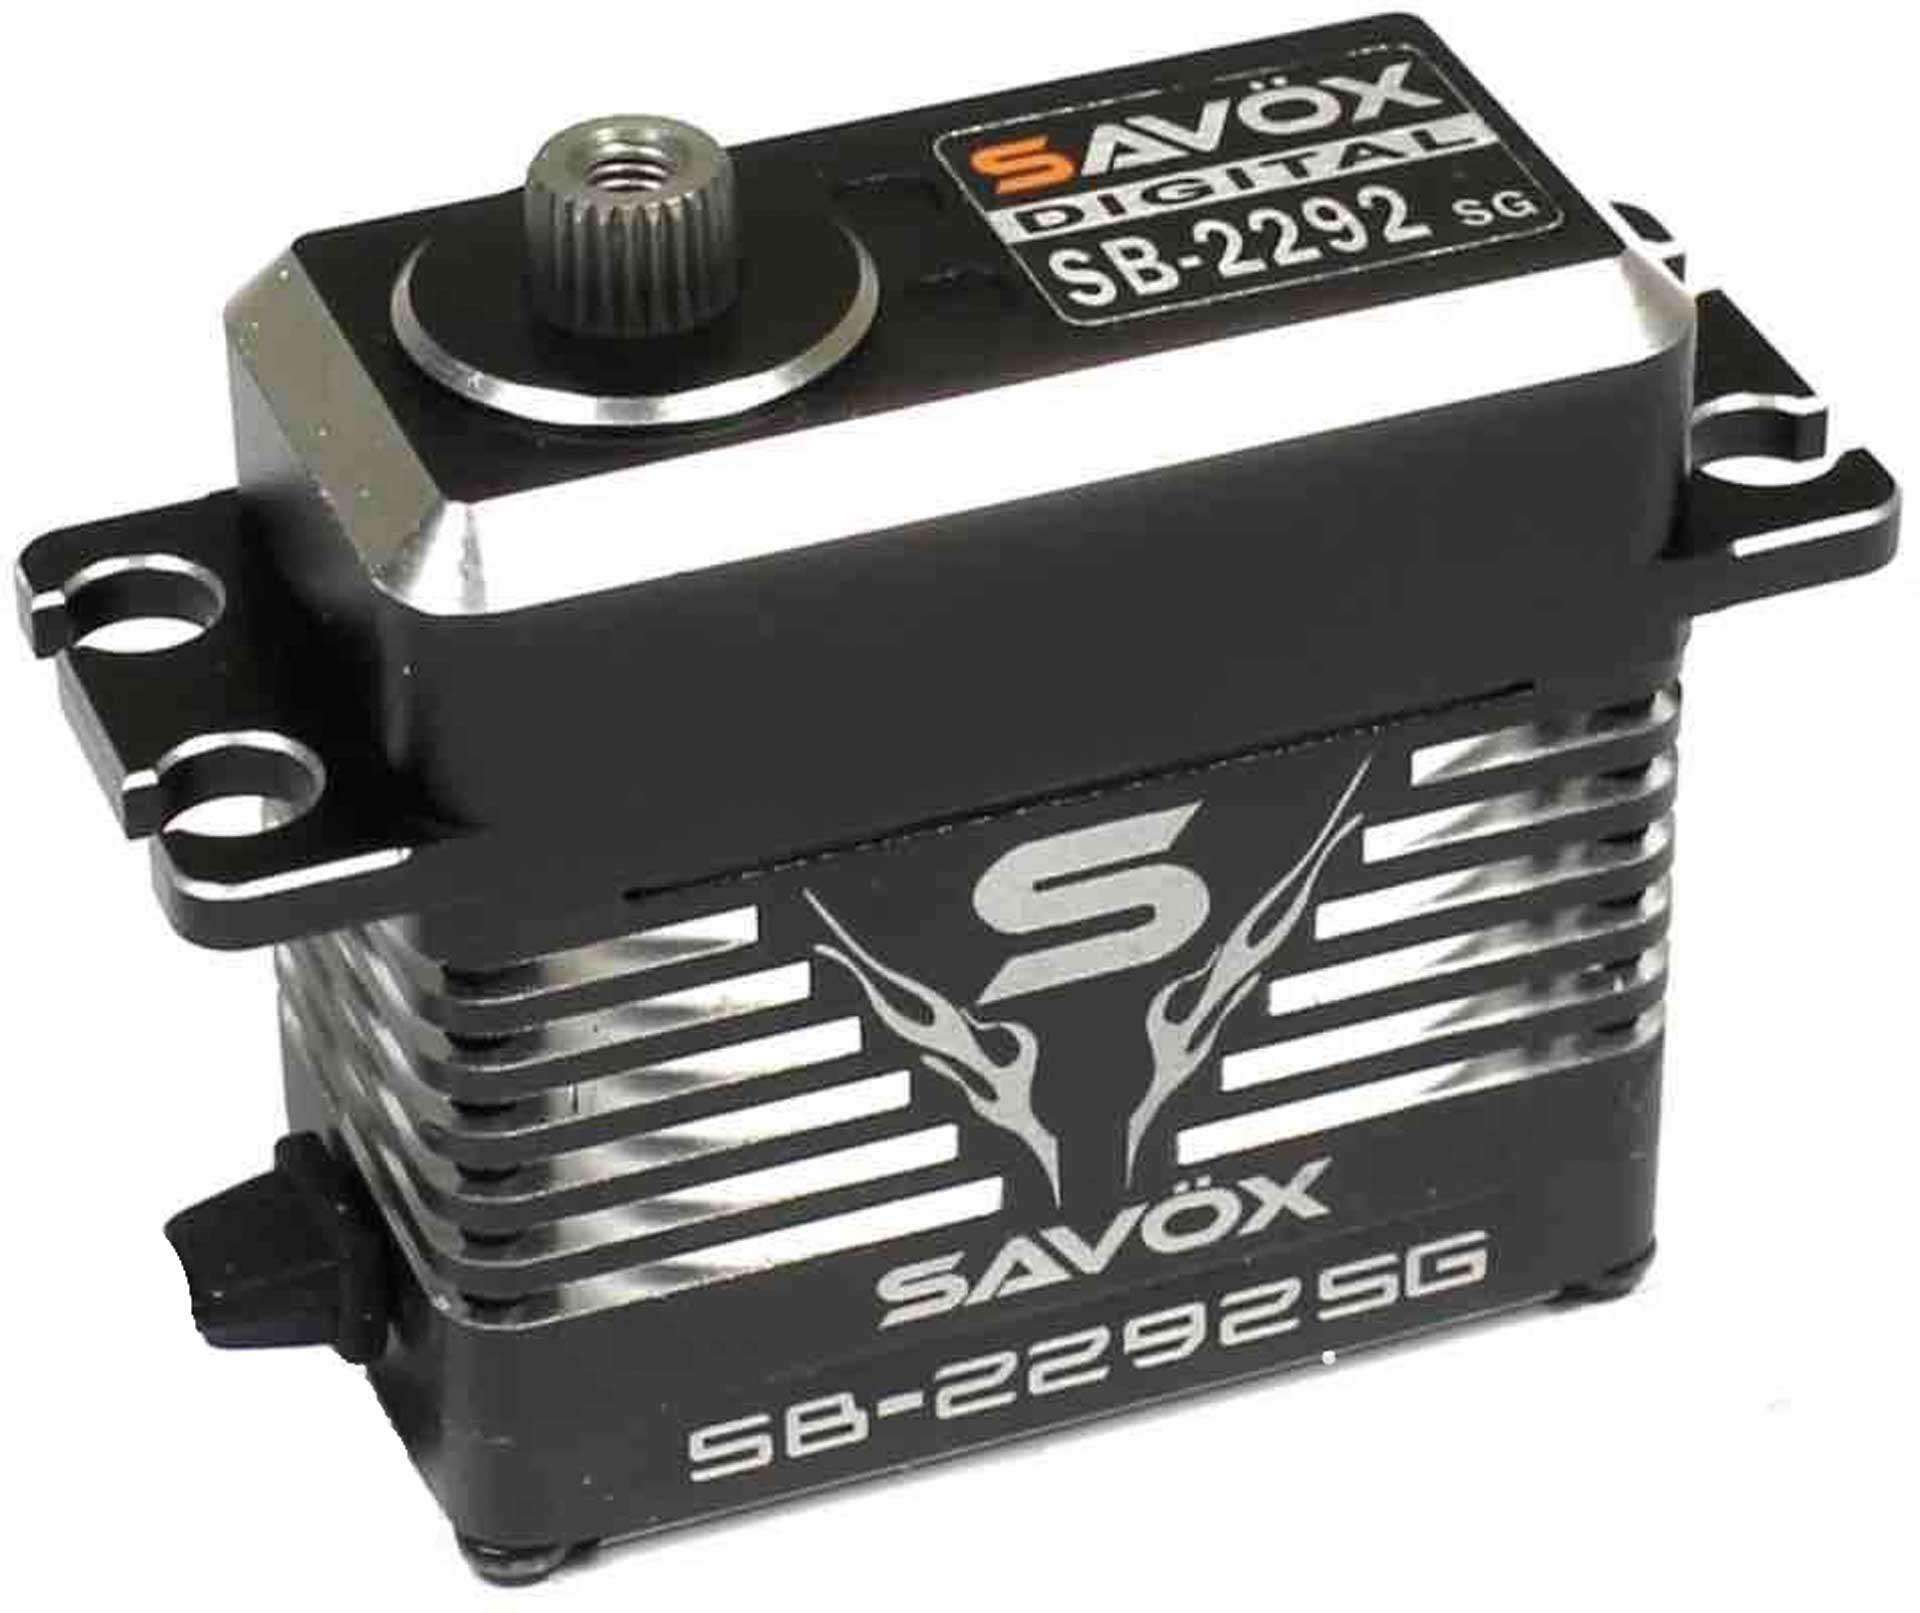 SAVÖX SB-2292SG (7,4V/31KG/0,07s) BRUSHLESS DIGITAL HV SERVO BLACK LINE